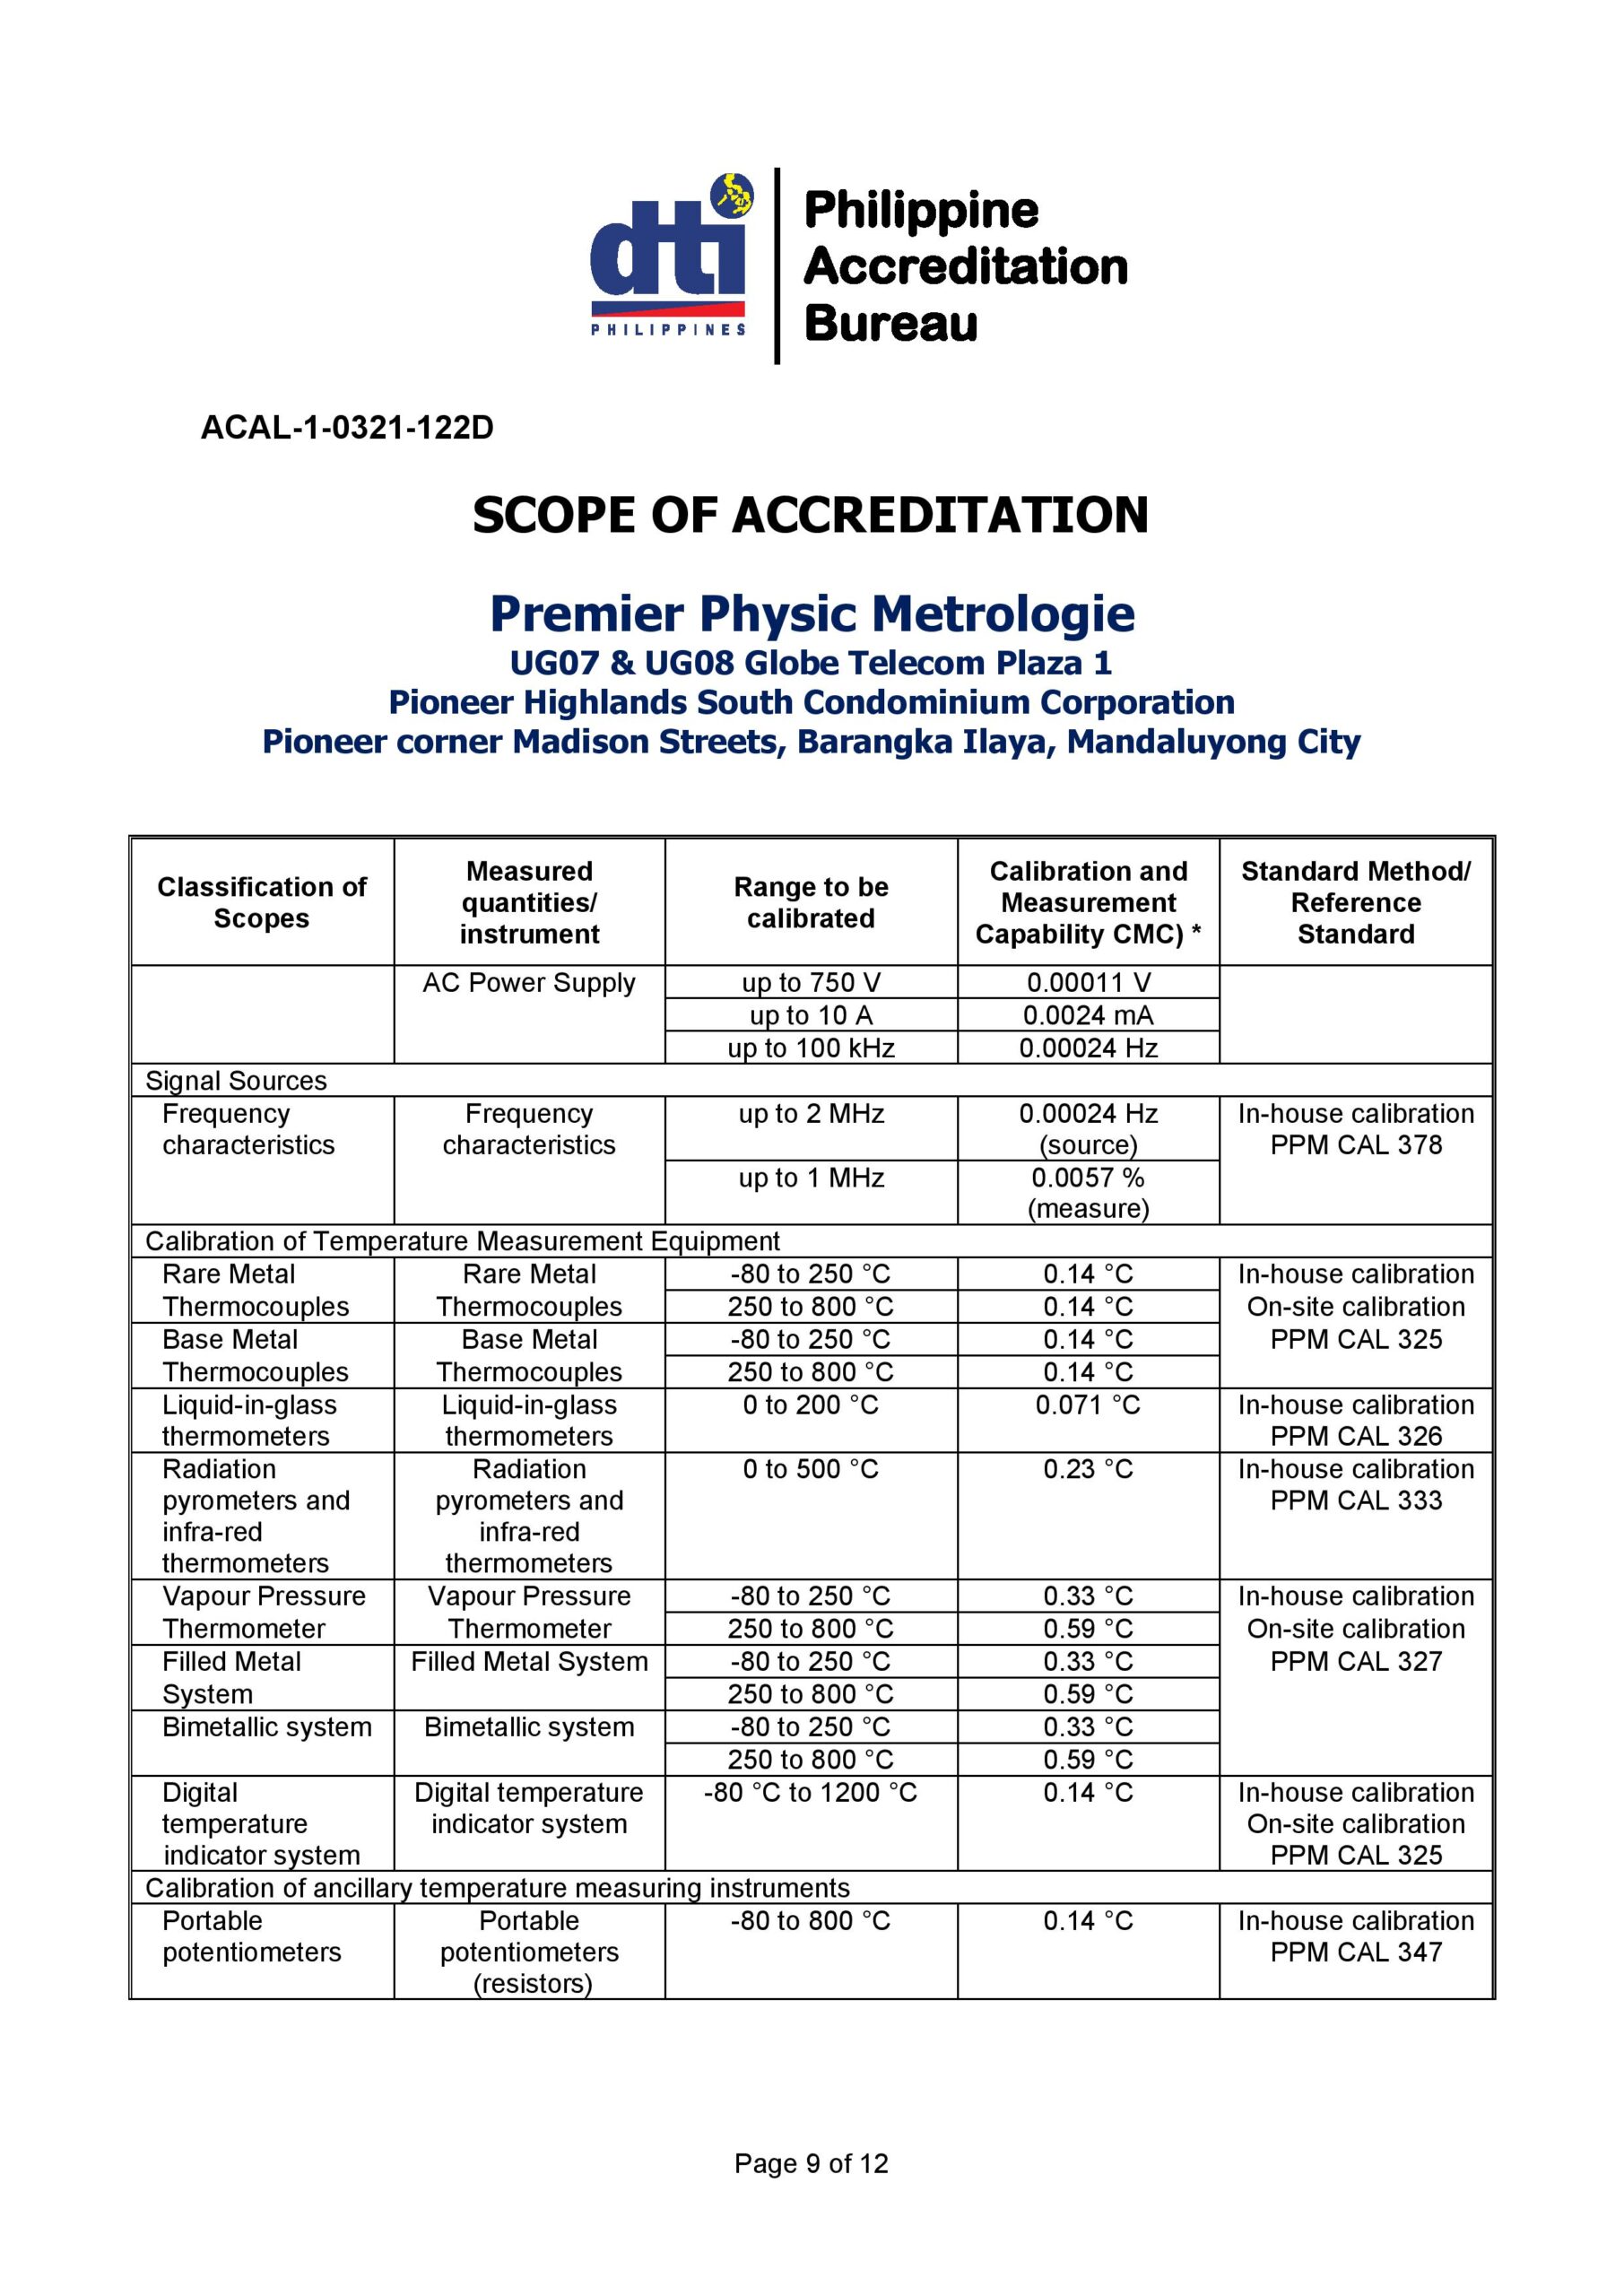 Premier Physic Metrologie - Scope of Accreditation 9